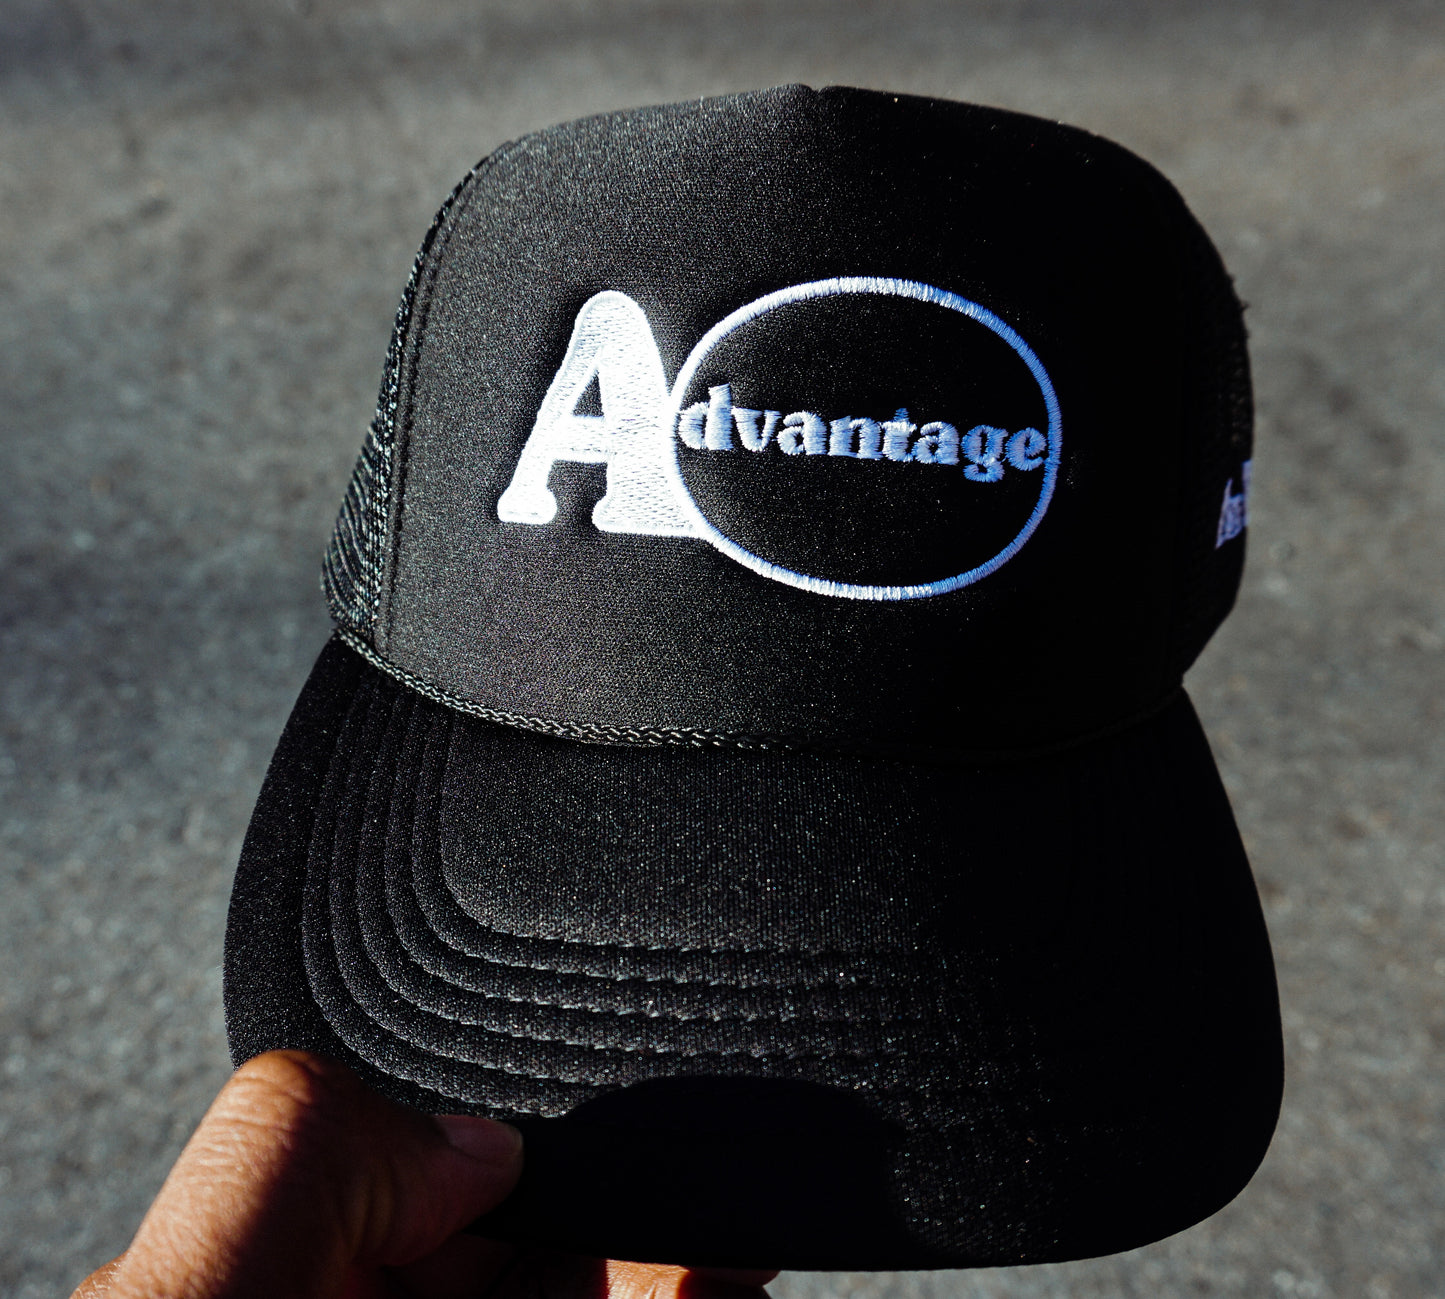 Advantage (Black) Trucker Hats